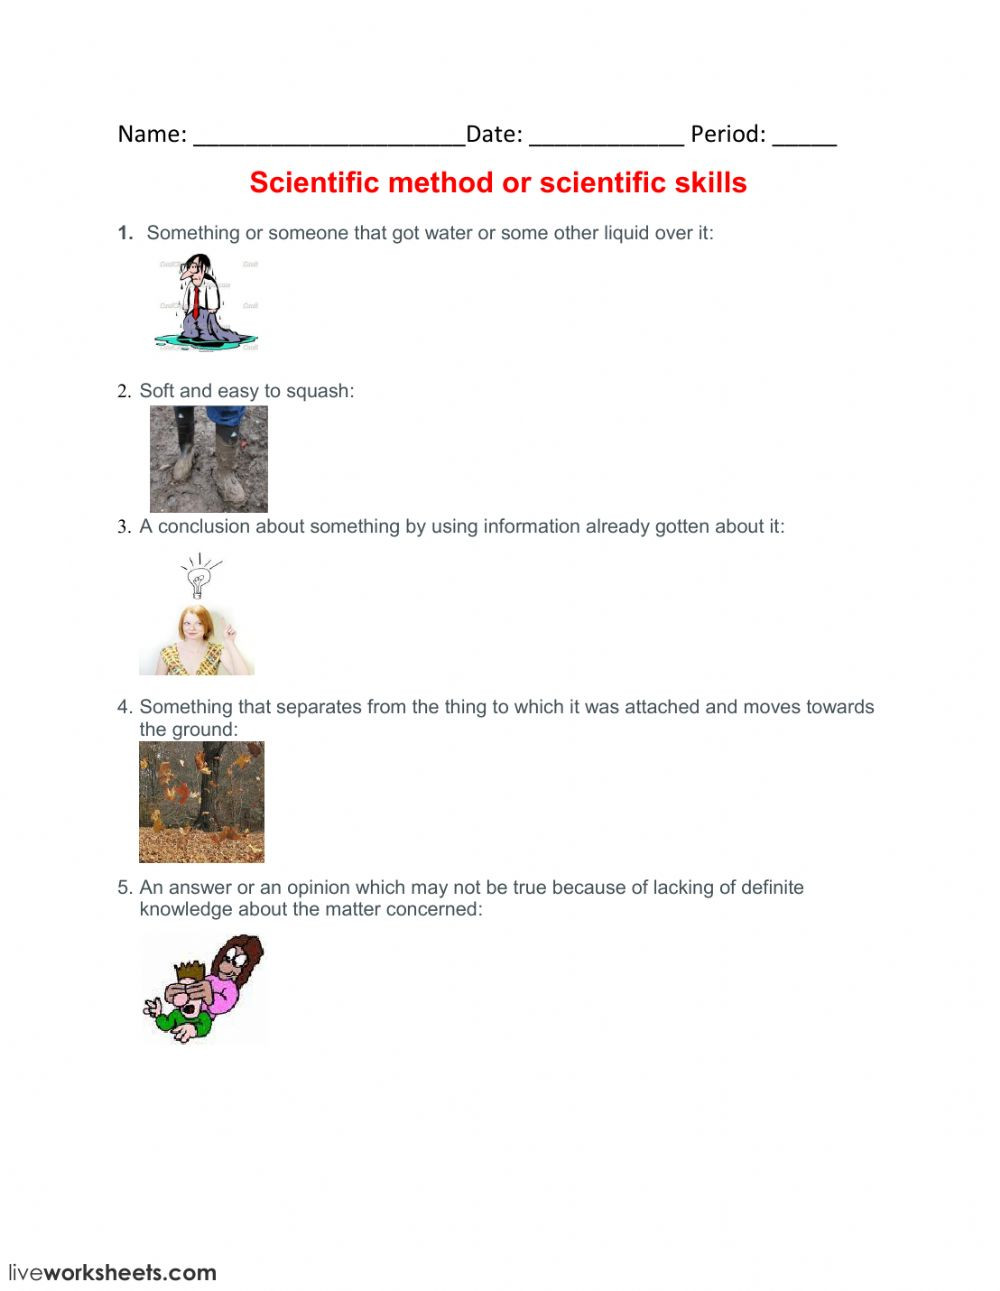 Scientific Method Worksheet Pdf Scientific Method or Scientific Skills Interactive Worksheet